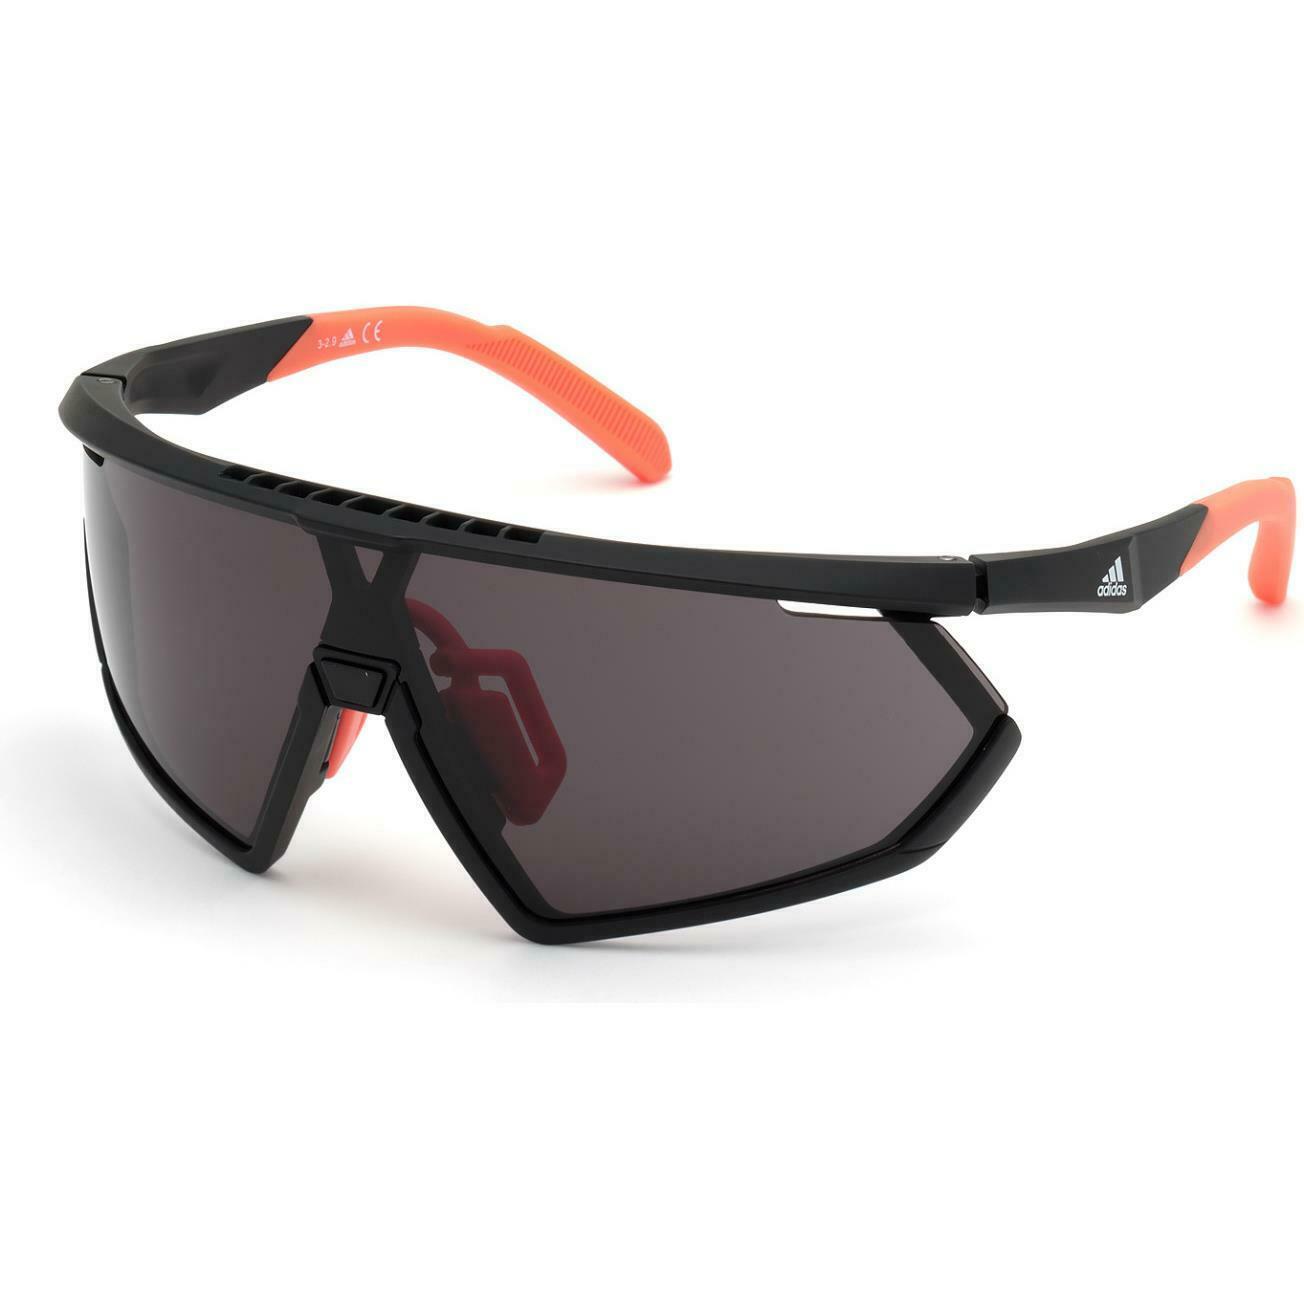 Adidas Sport Sunglasses SP0001 02A Matte Black Frame Dark Grey Lenses Road